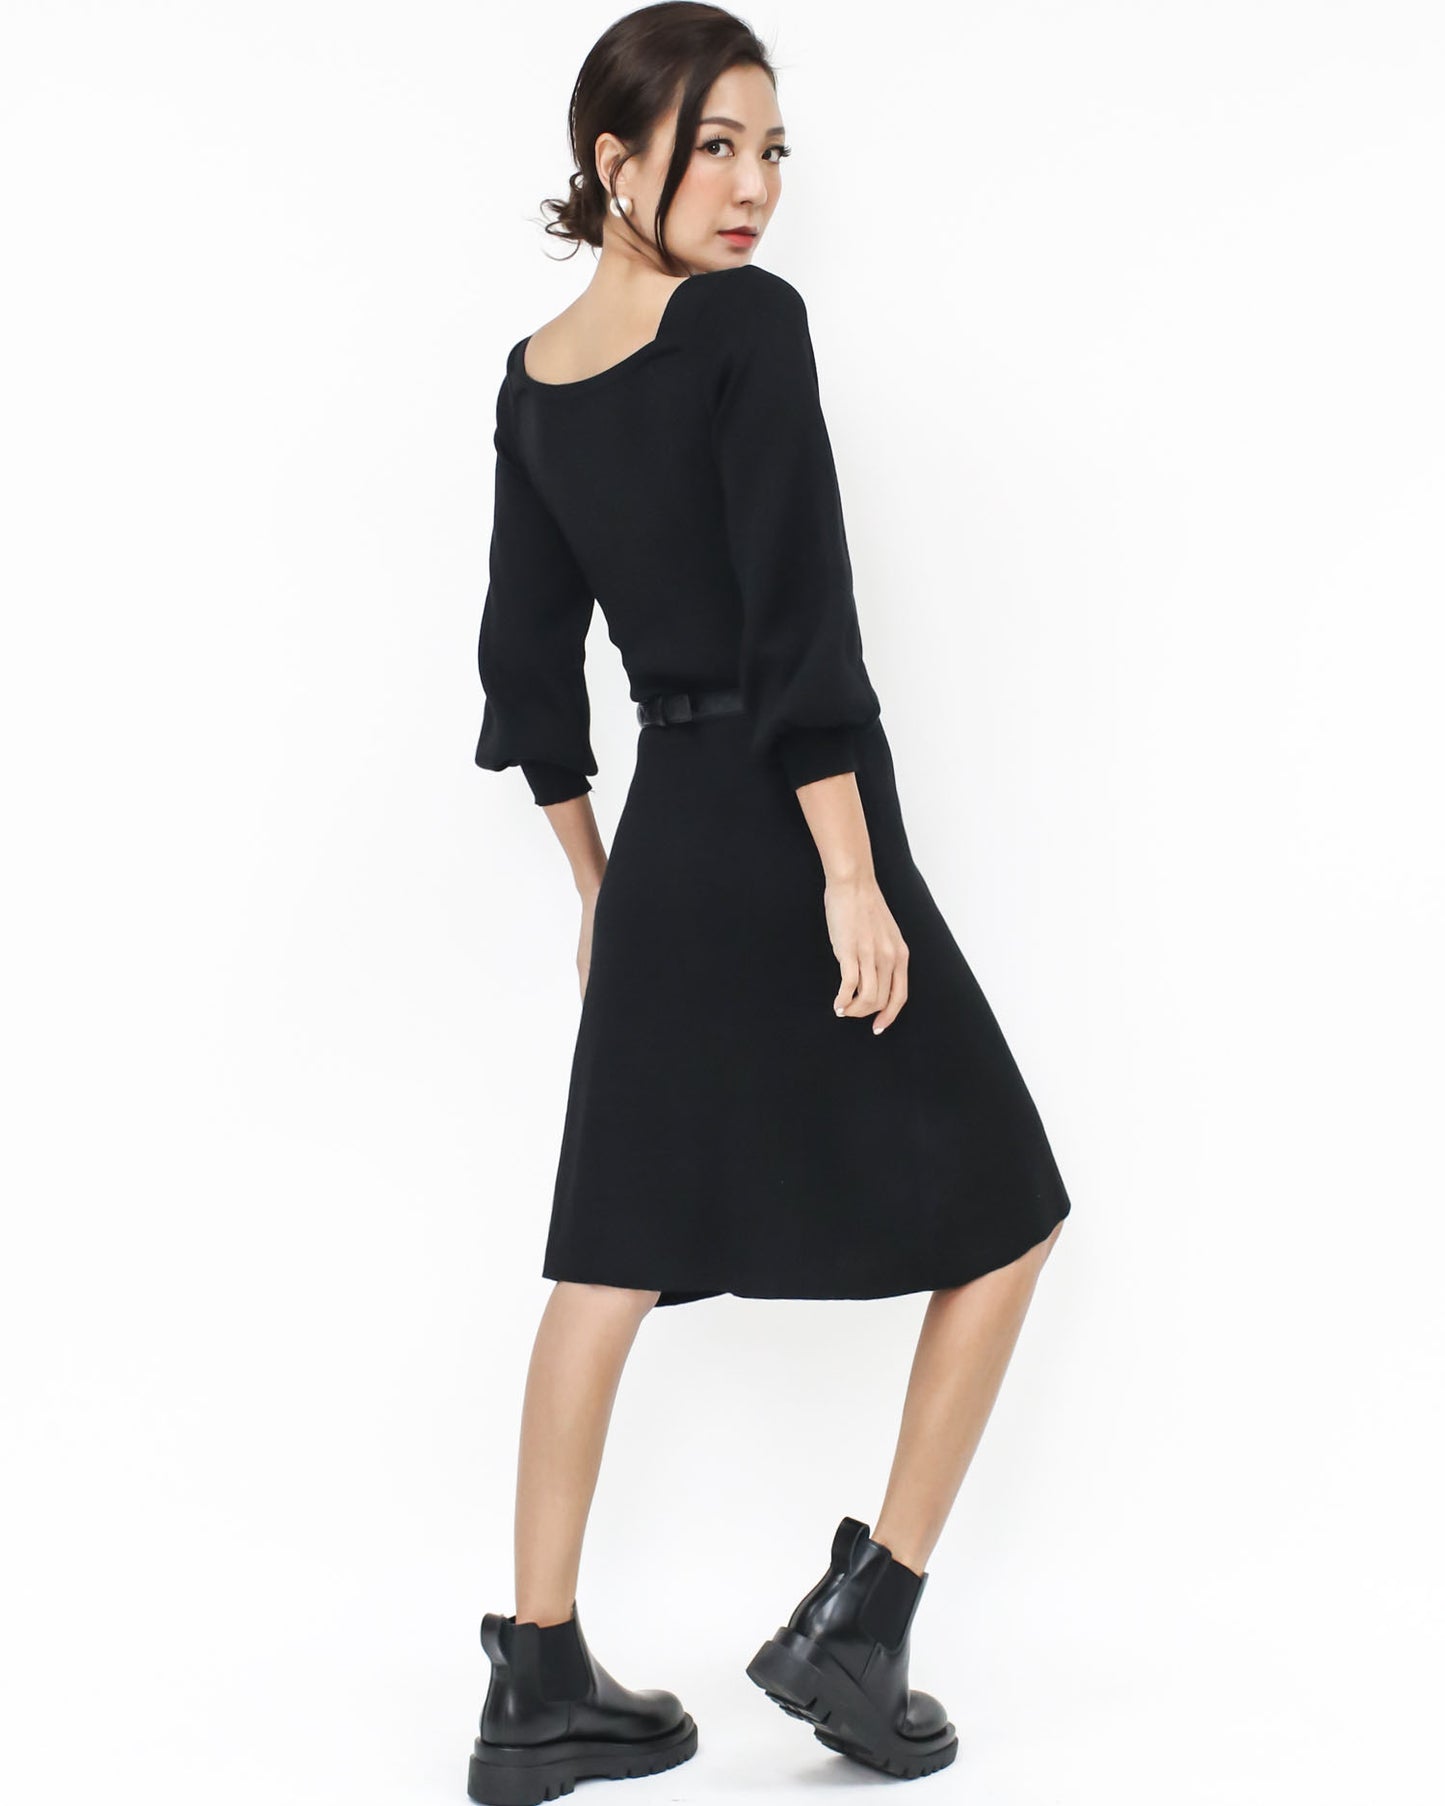 black square neckline knitted dress with belt *pre-order*